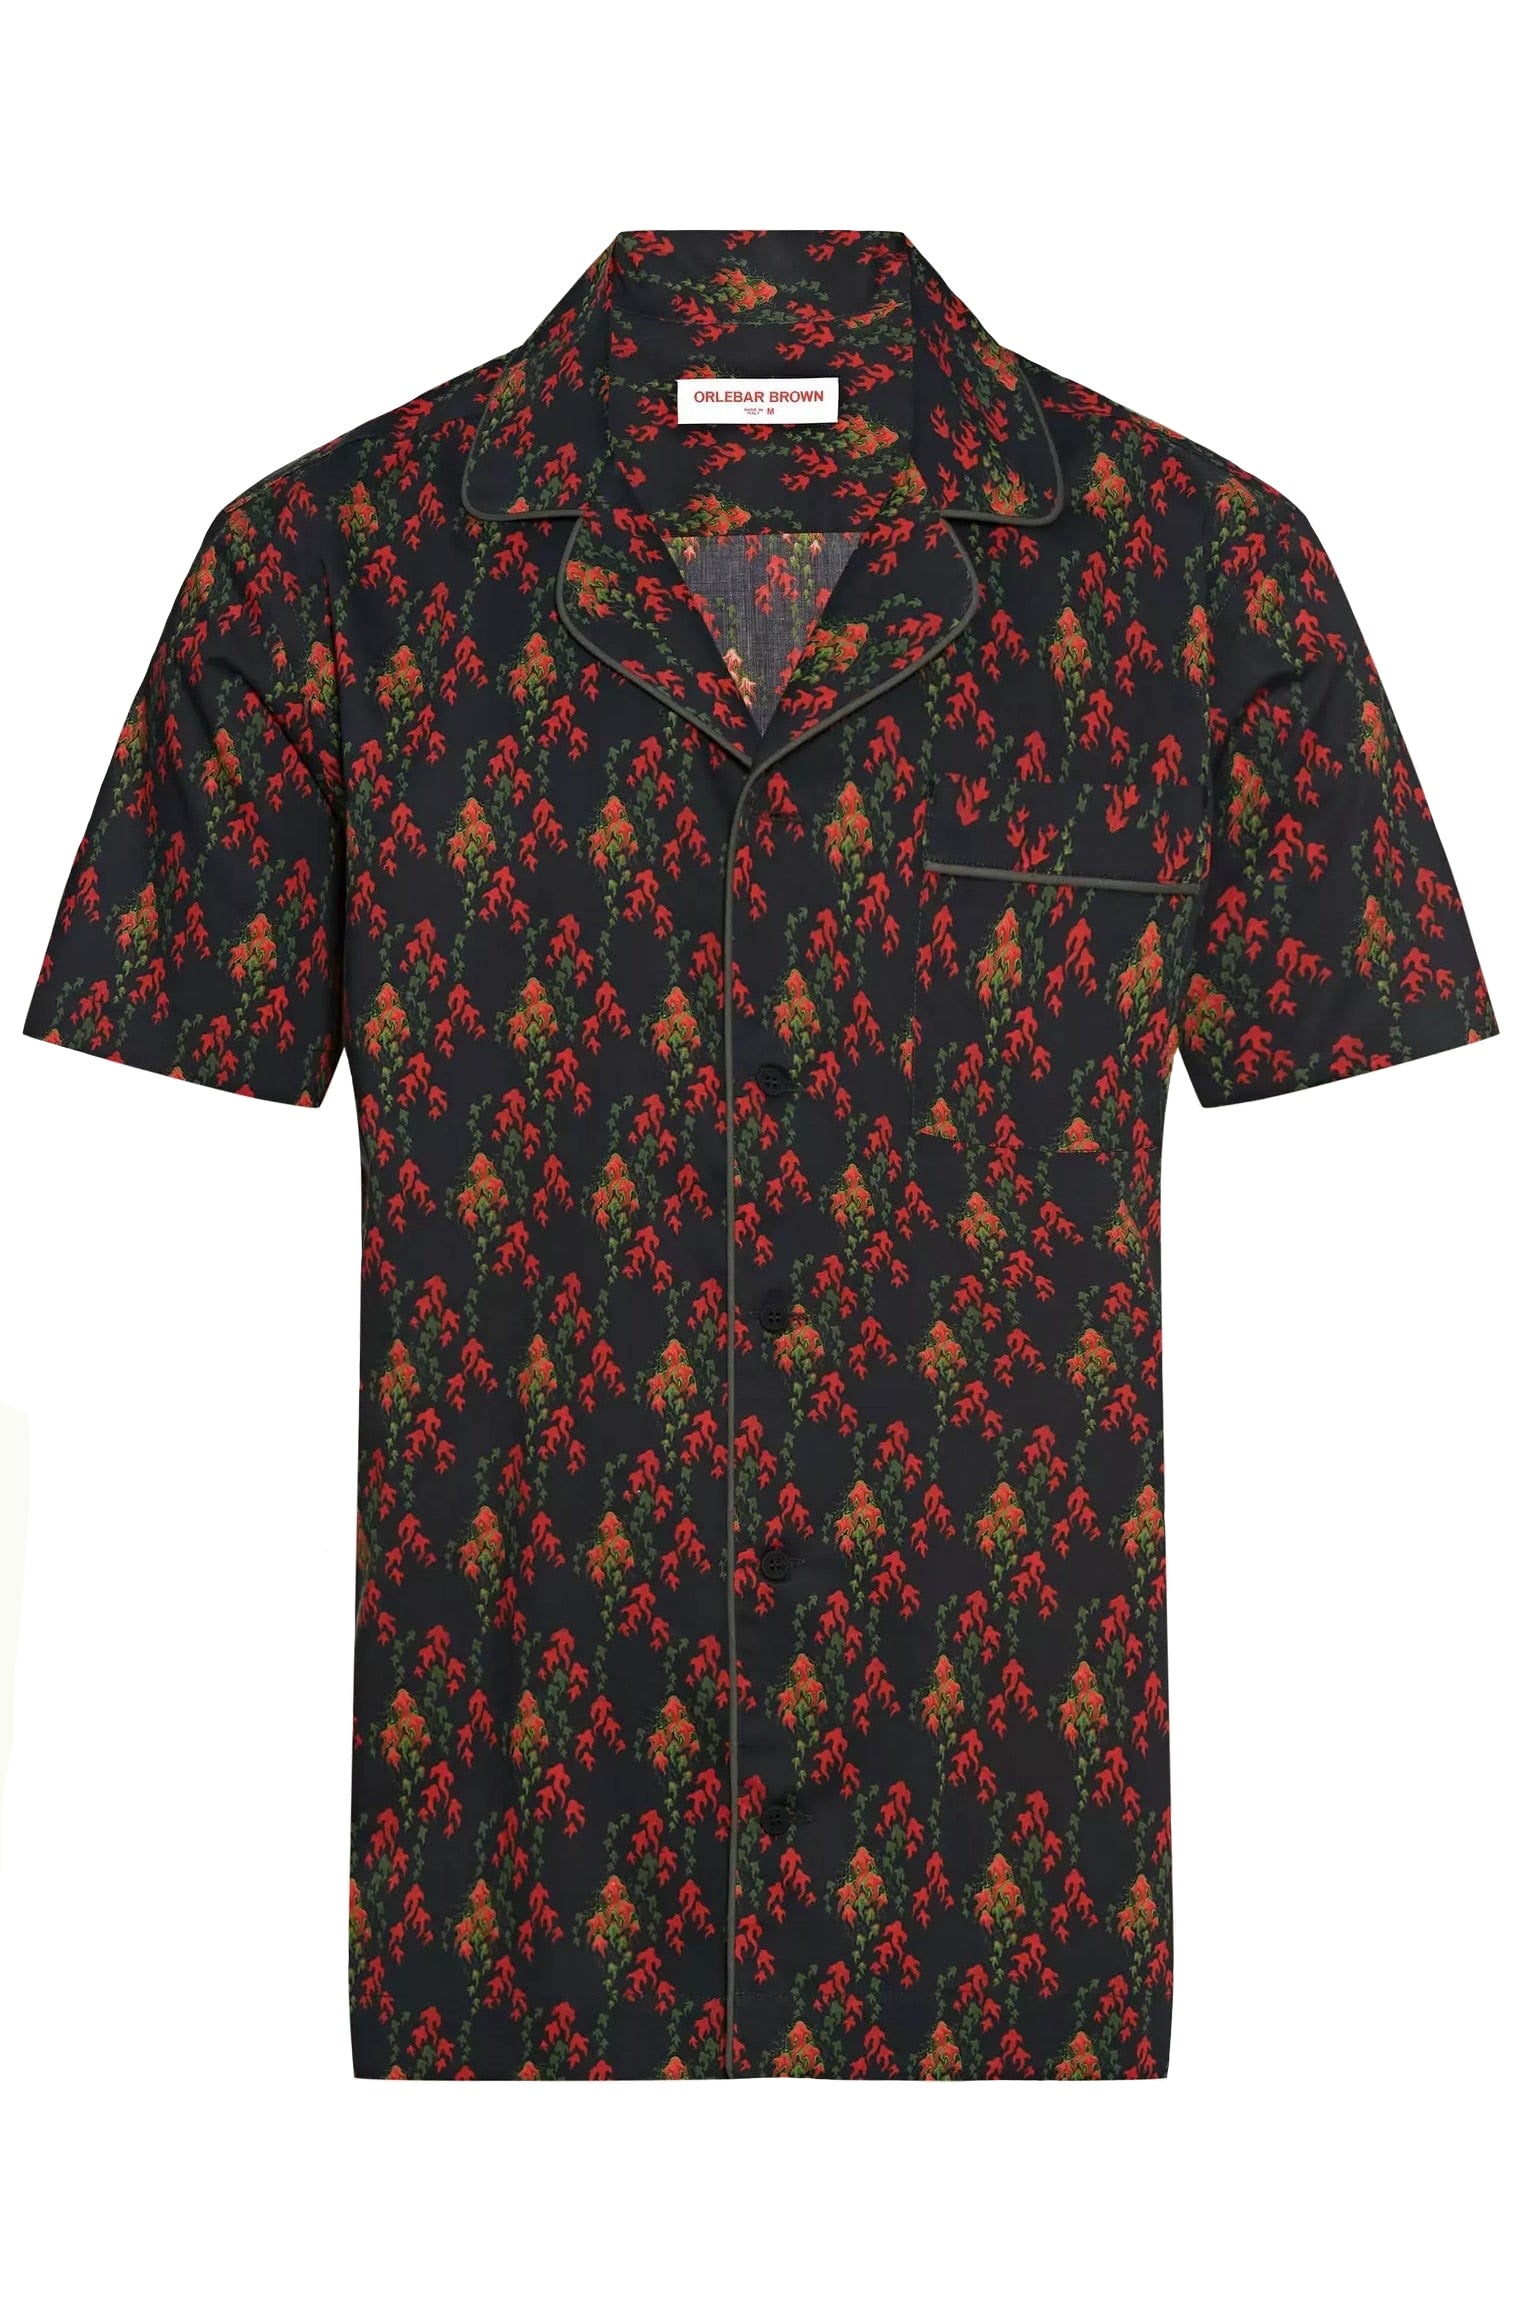 ORLEBAR BROWN-Aquila Print Capri Collar Short-Sleeve Marne Shirt-BLK/PORT